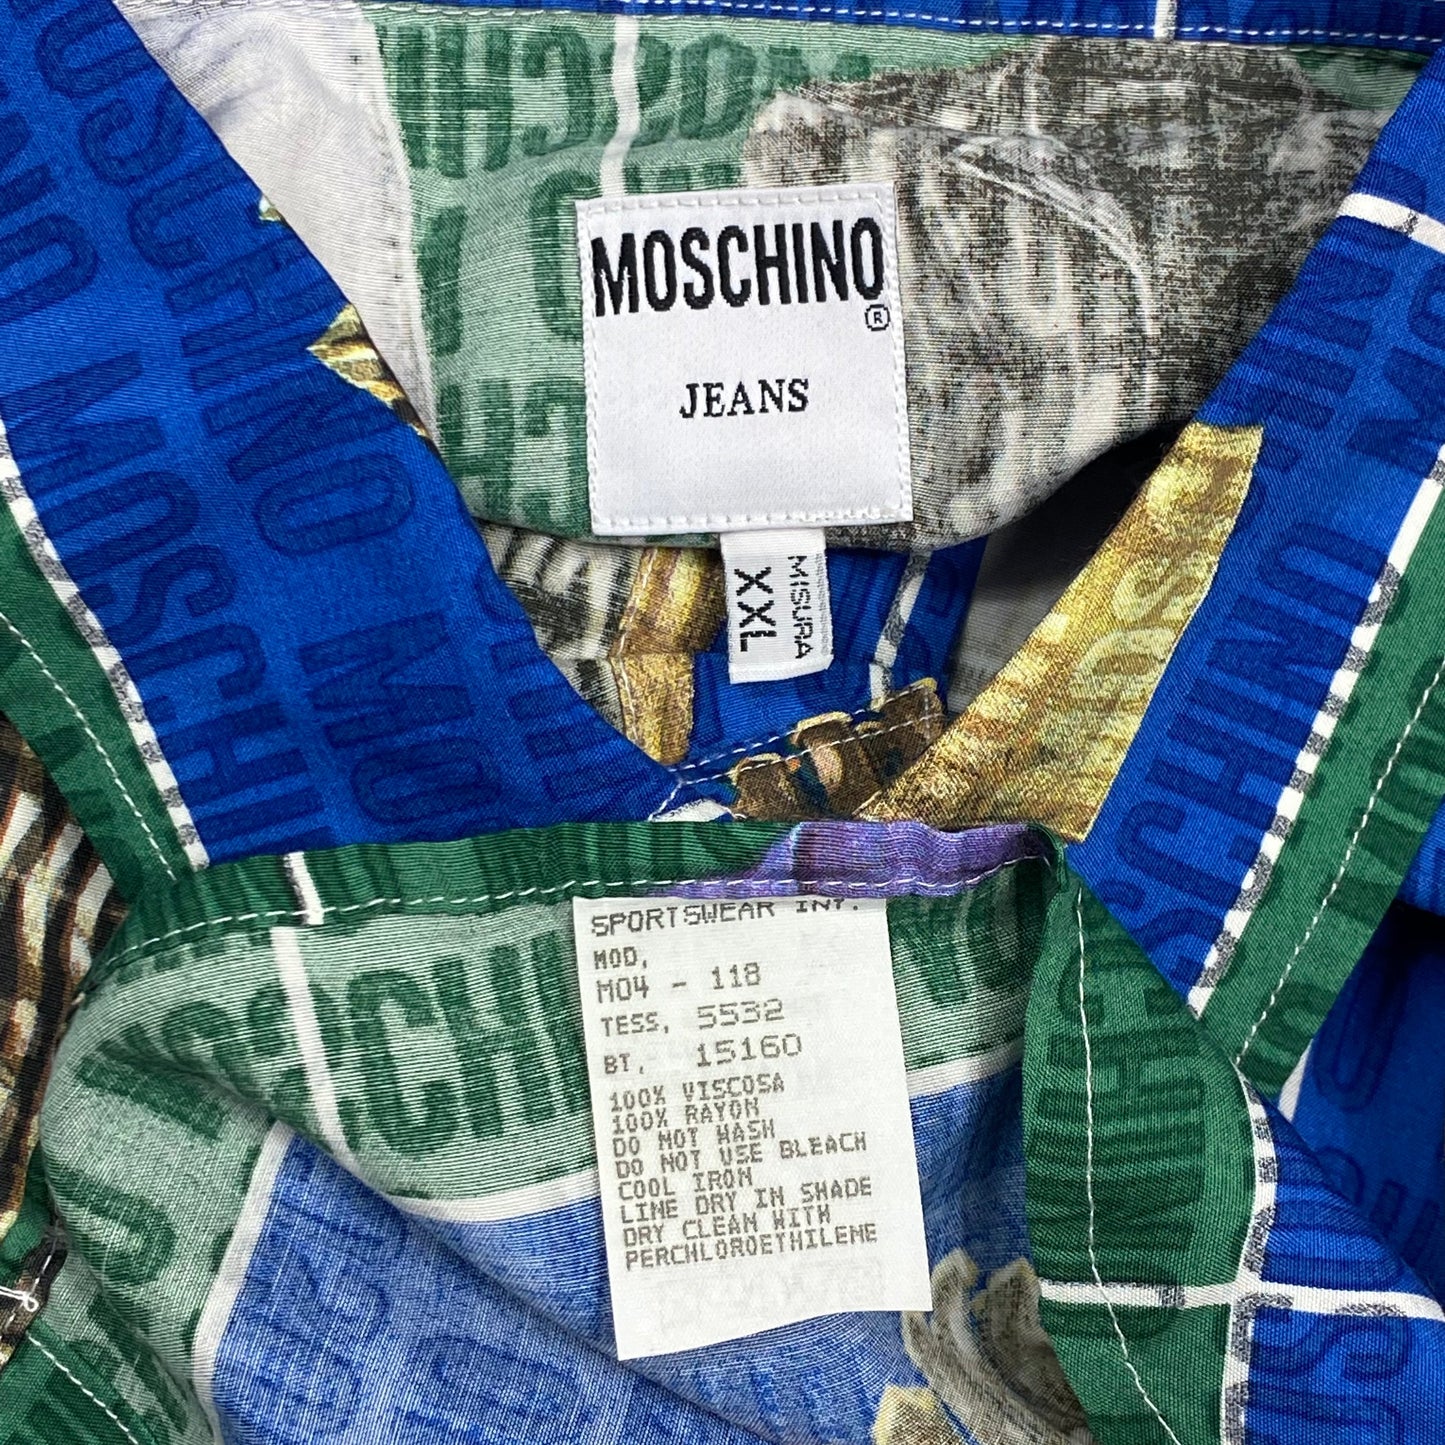 Moschino Jeans 1996 Clothes Print Shirt - XXL